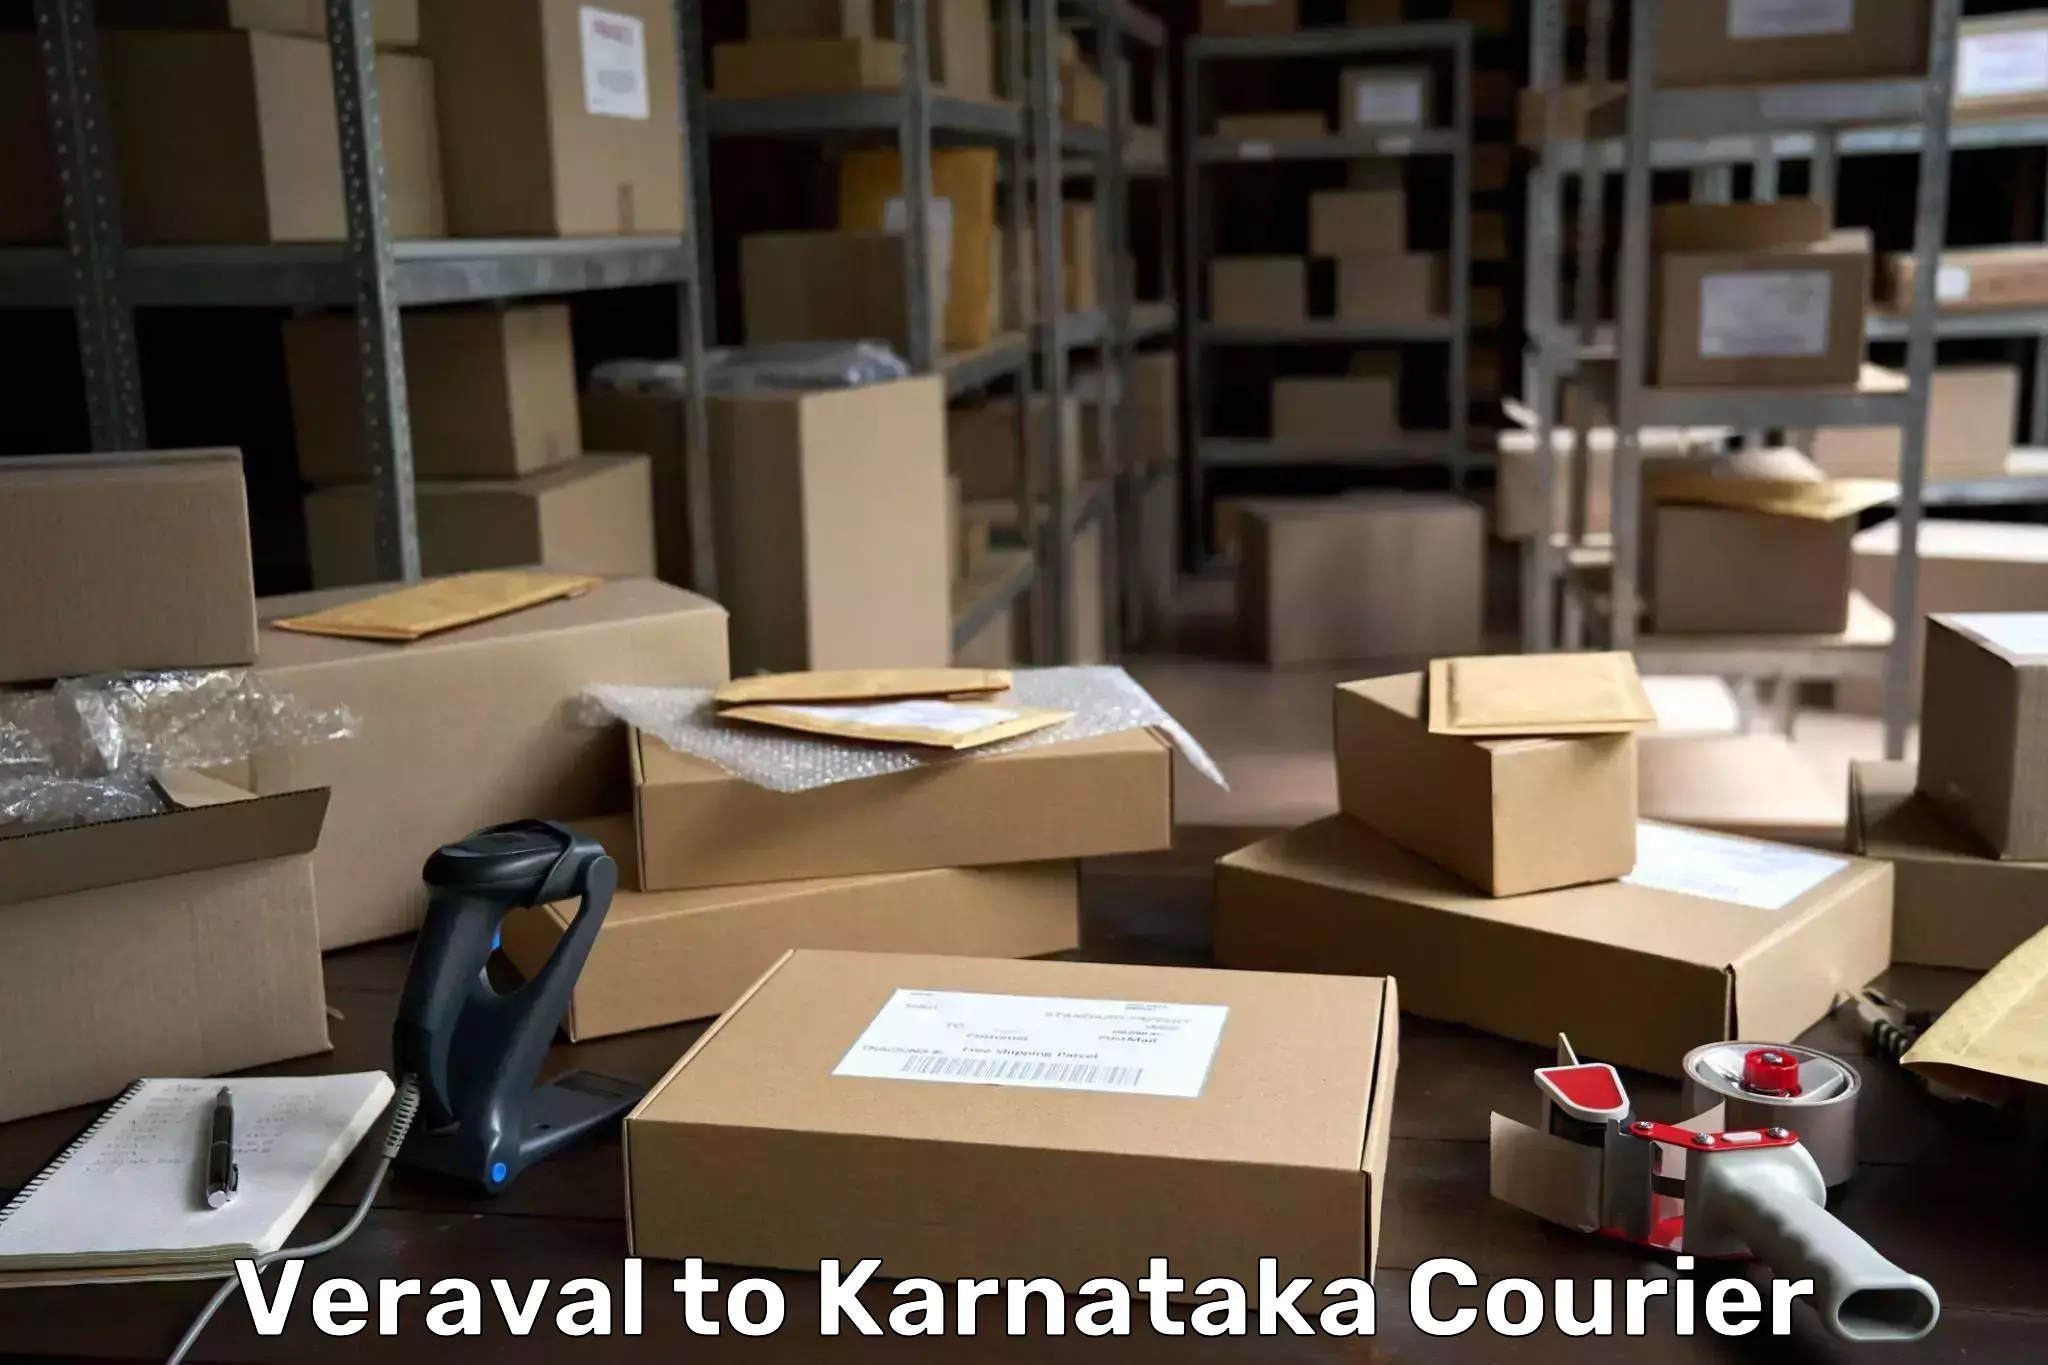 Courier service comparison Veraval to Karnataka